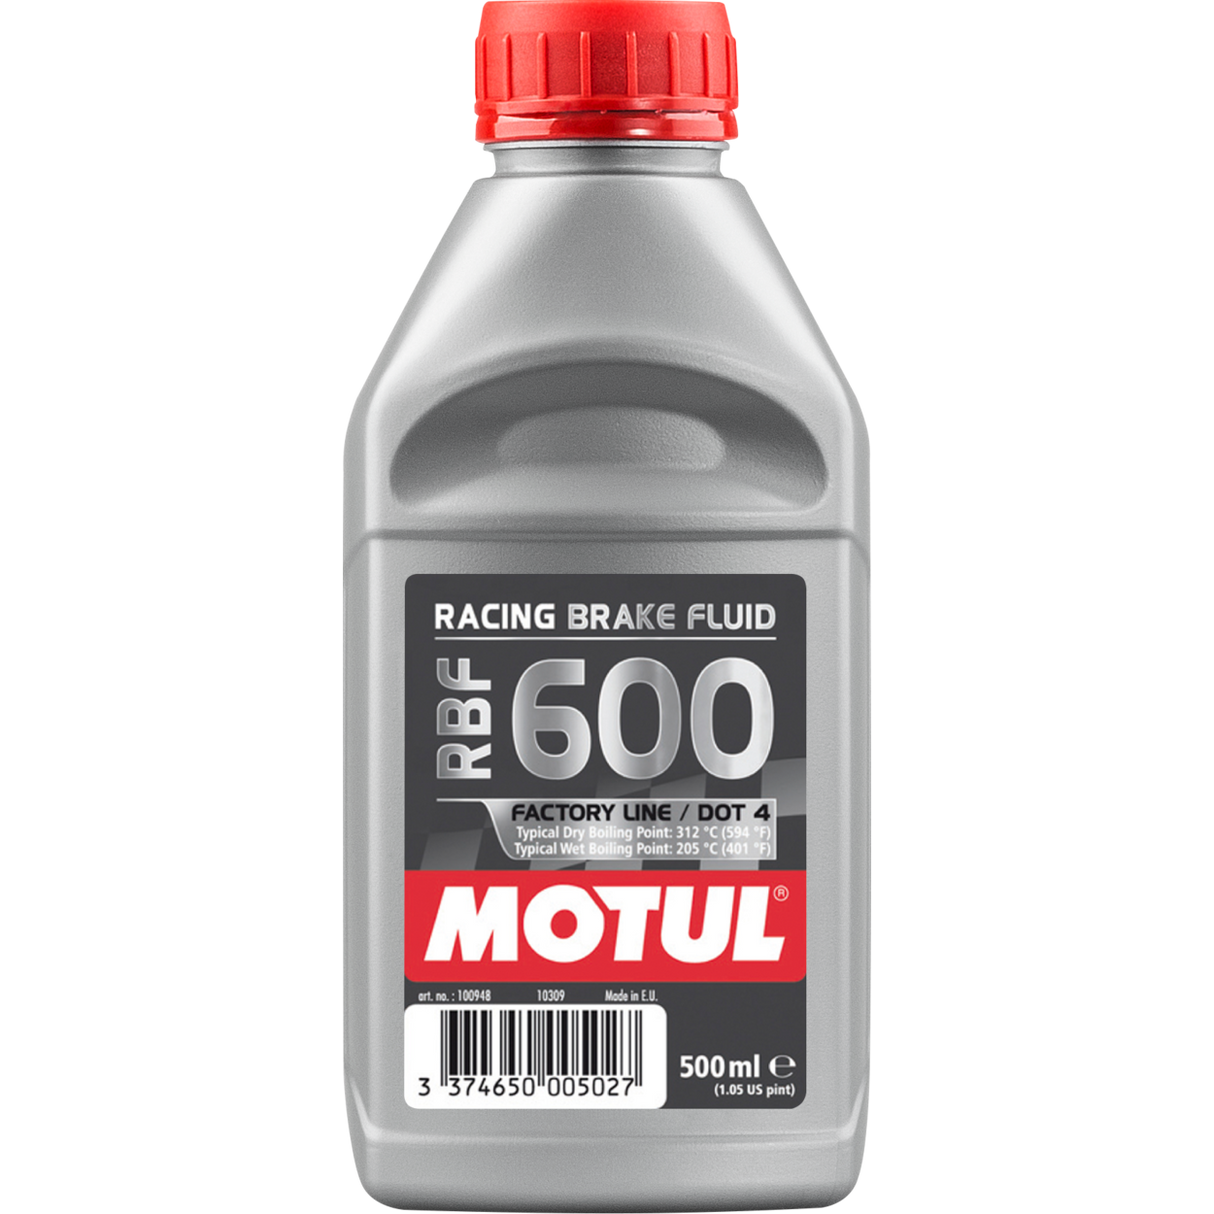 RBF 600 RACING BRAKE FLUID 500ML